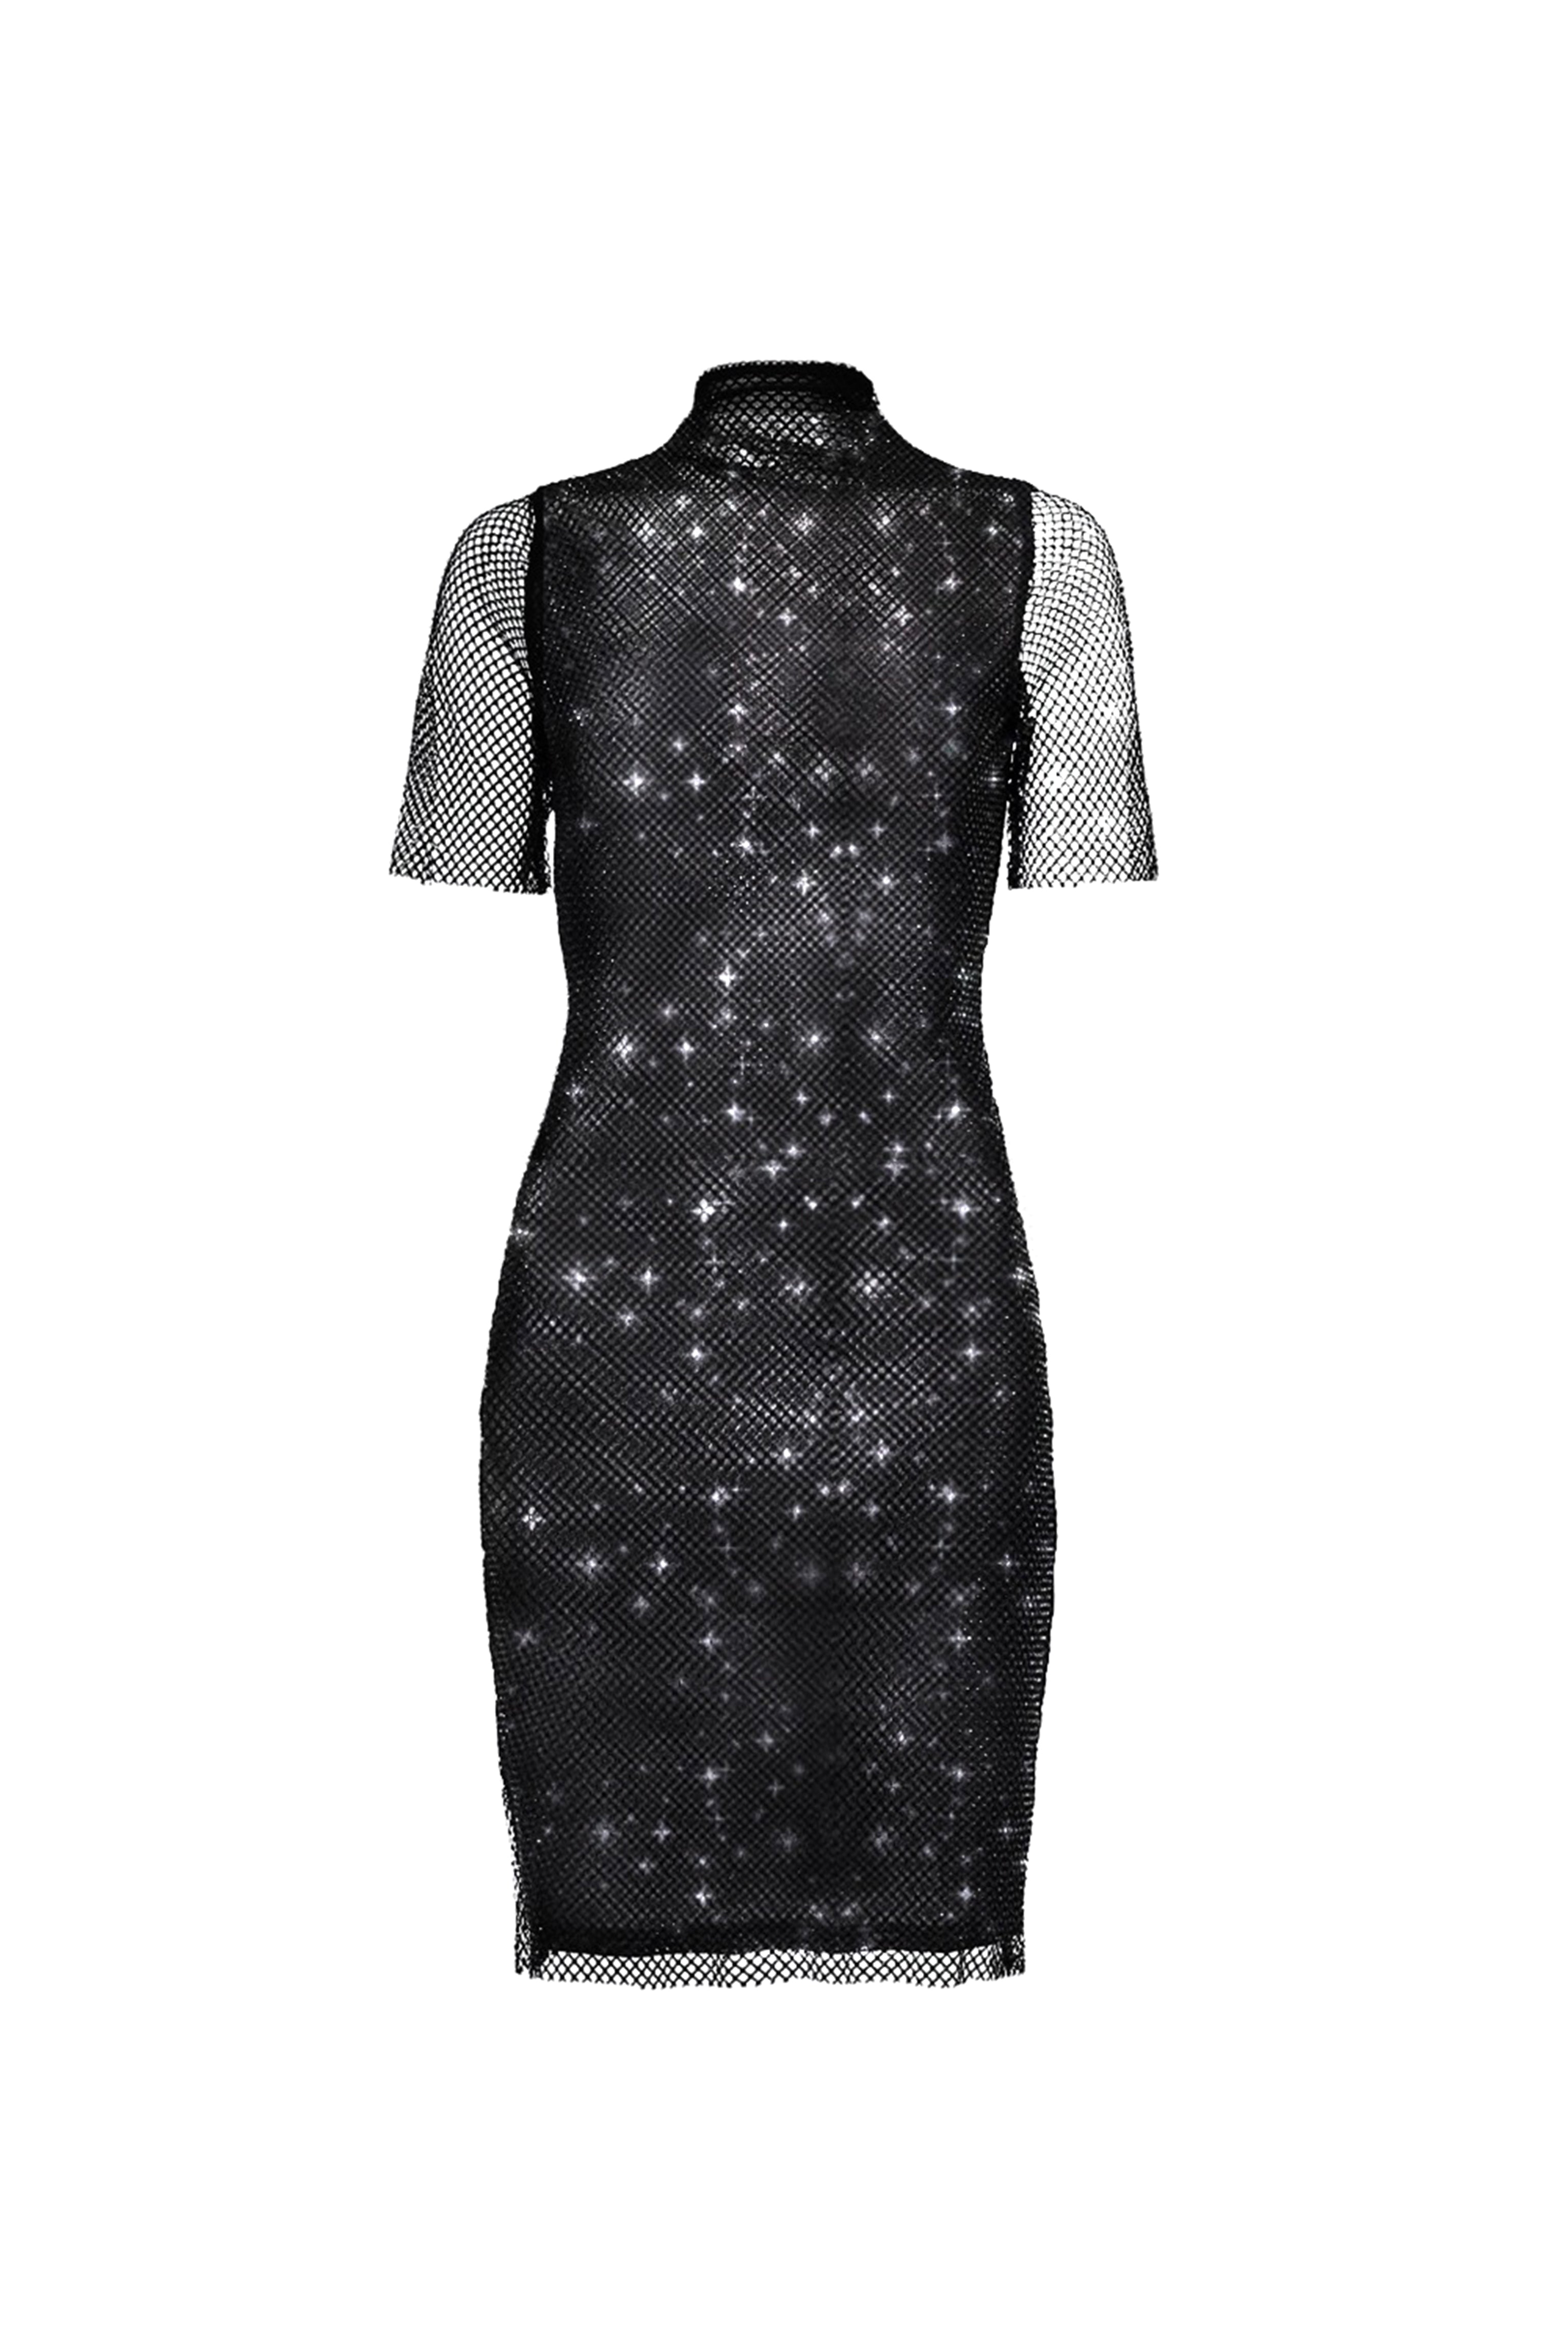 Mila Black Jewel Embellished High-Neck Mini Dress with Short Sleeves | AMYLYNN